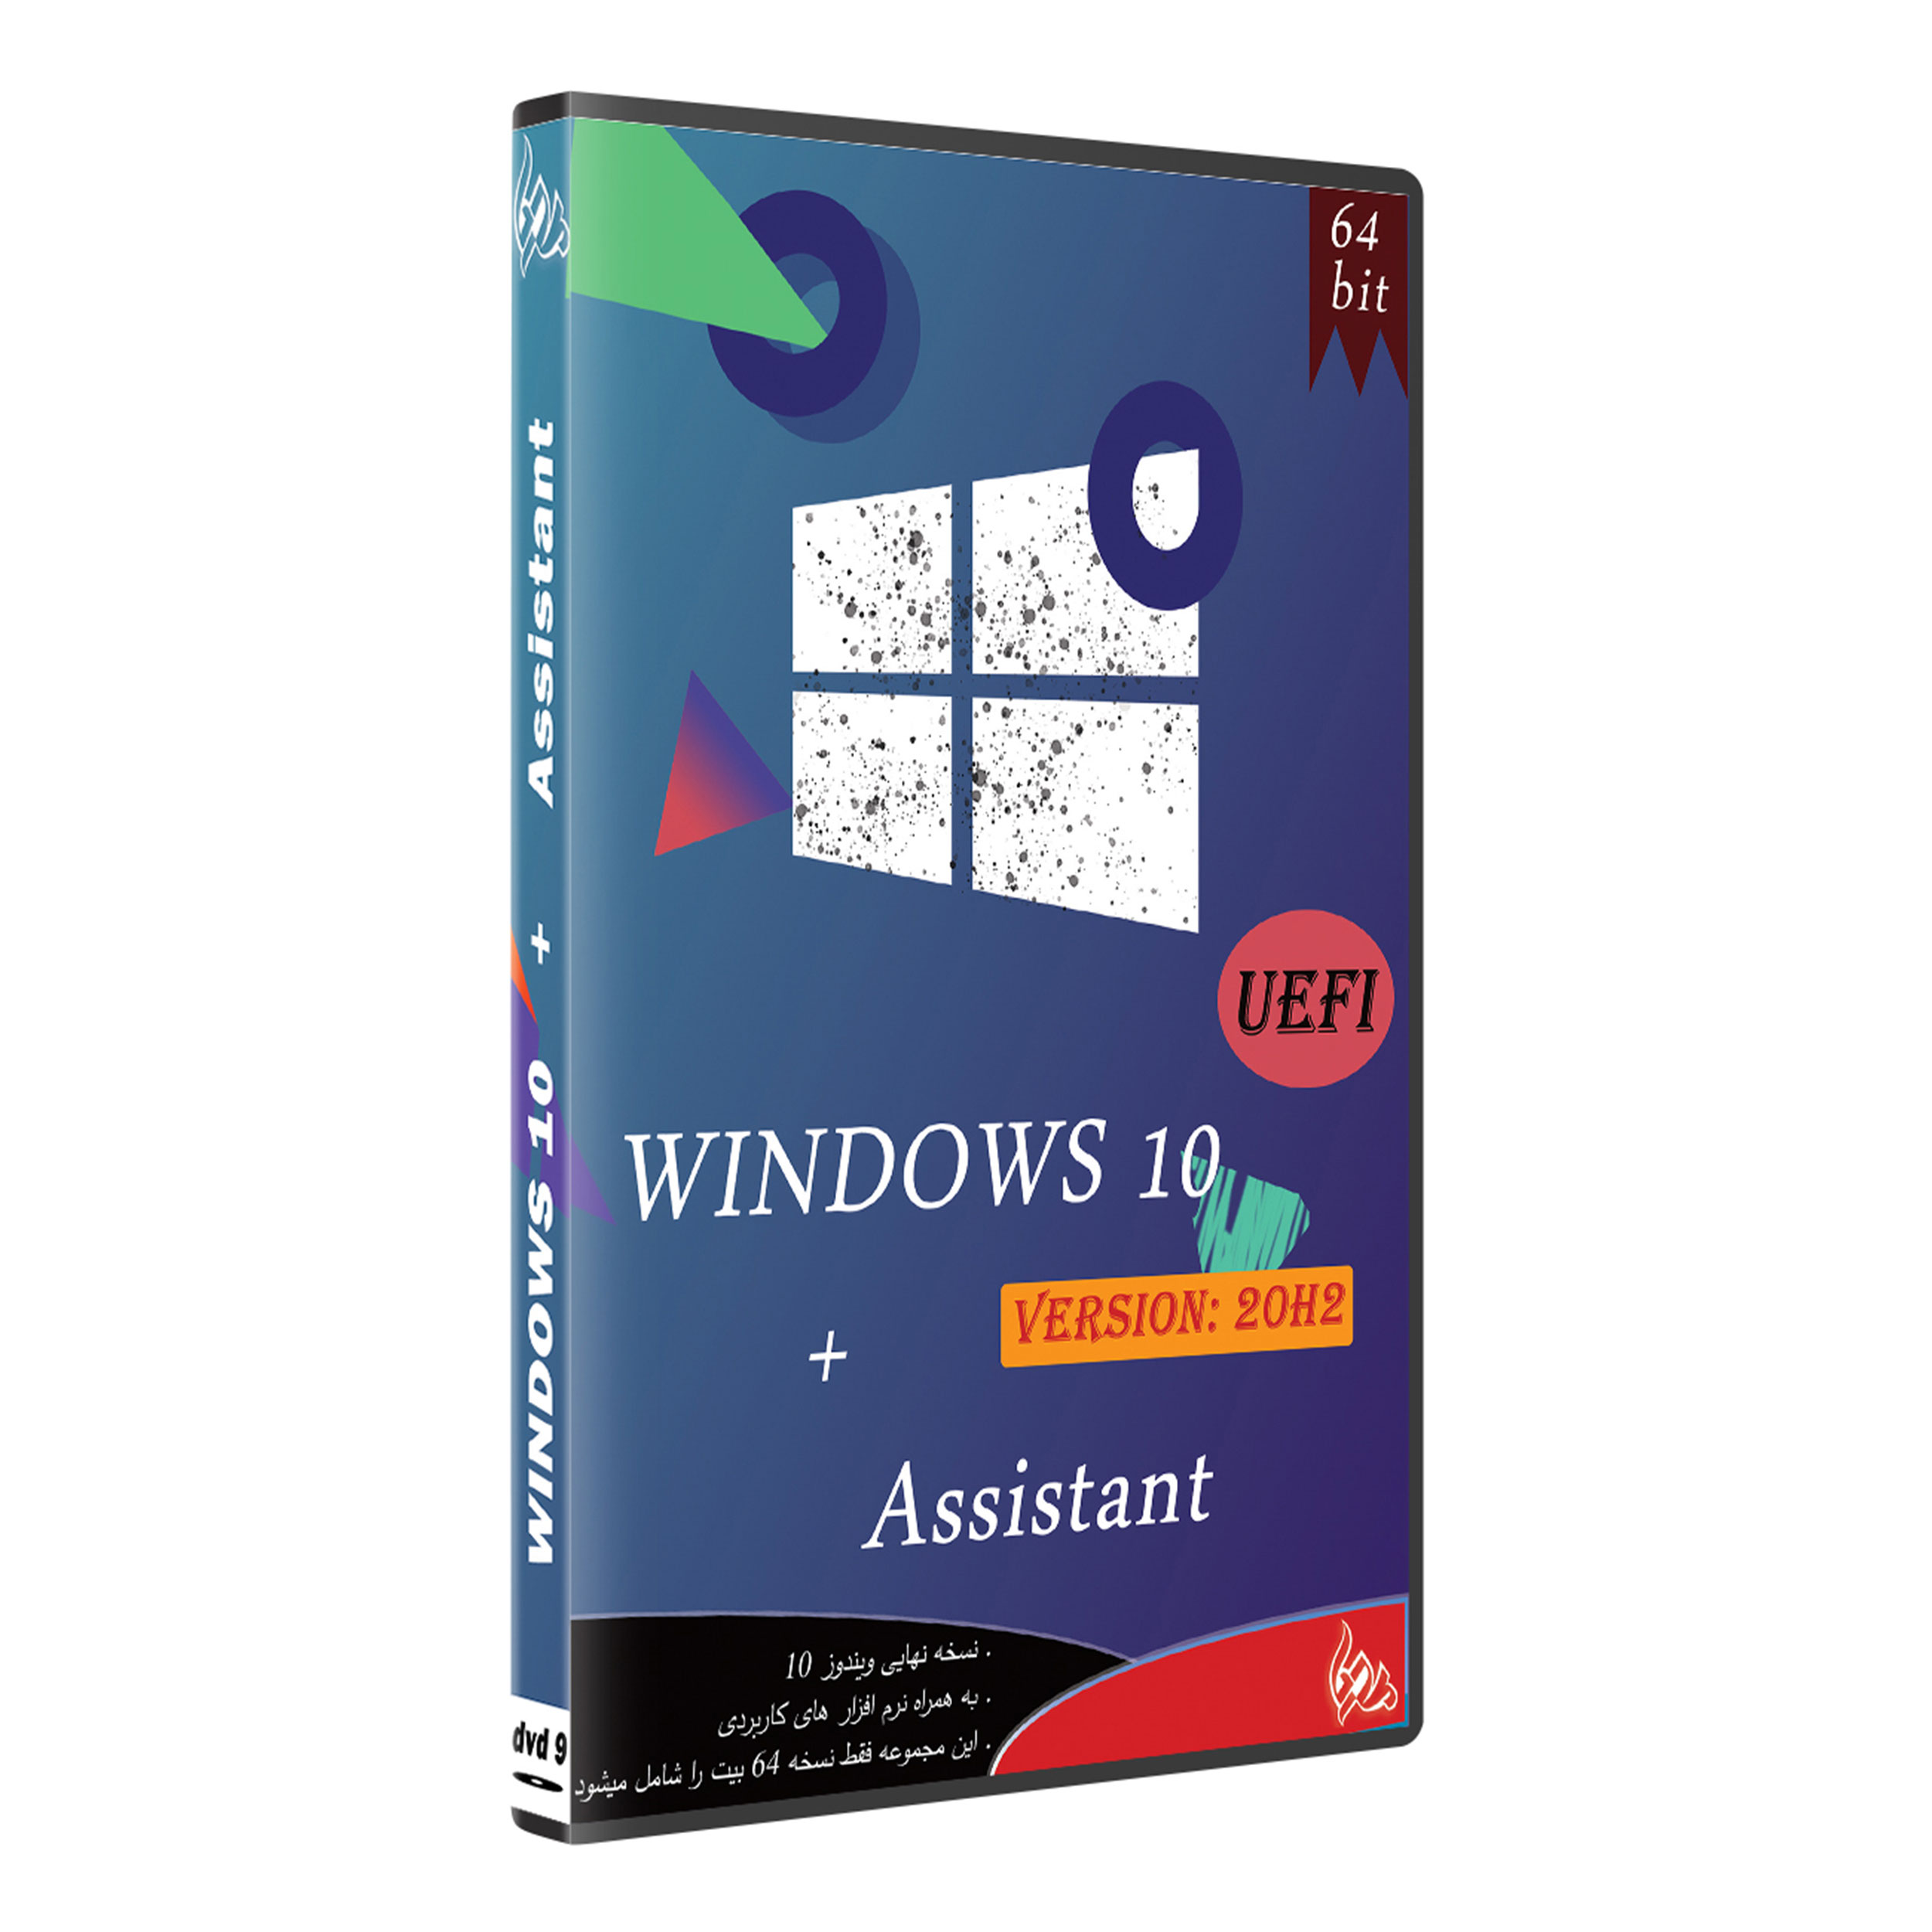  سیستم عامل Windows 10 UEFI + ASSISTANT  نشر پدیا